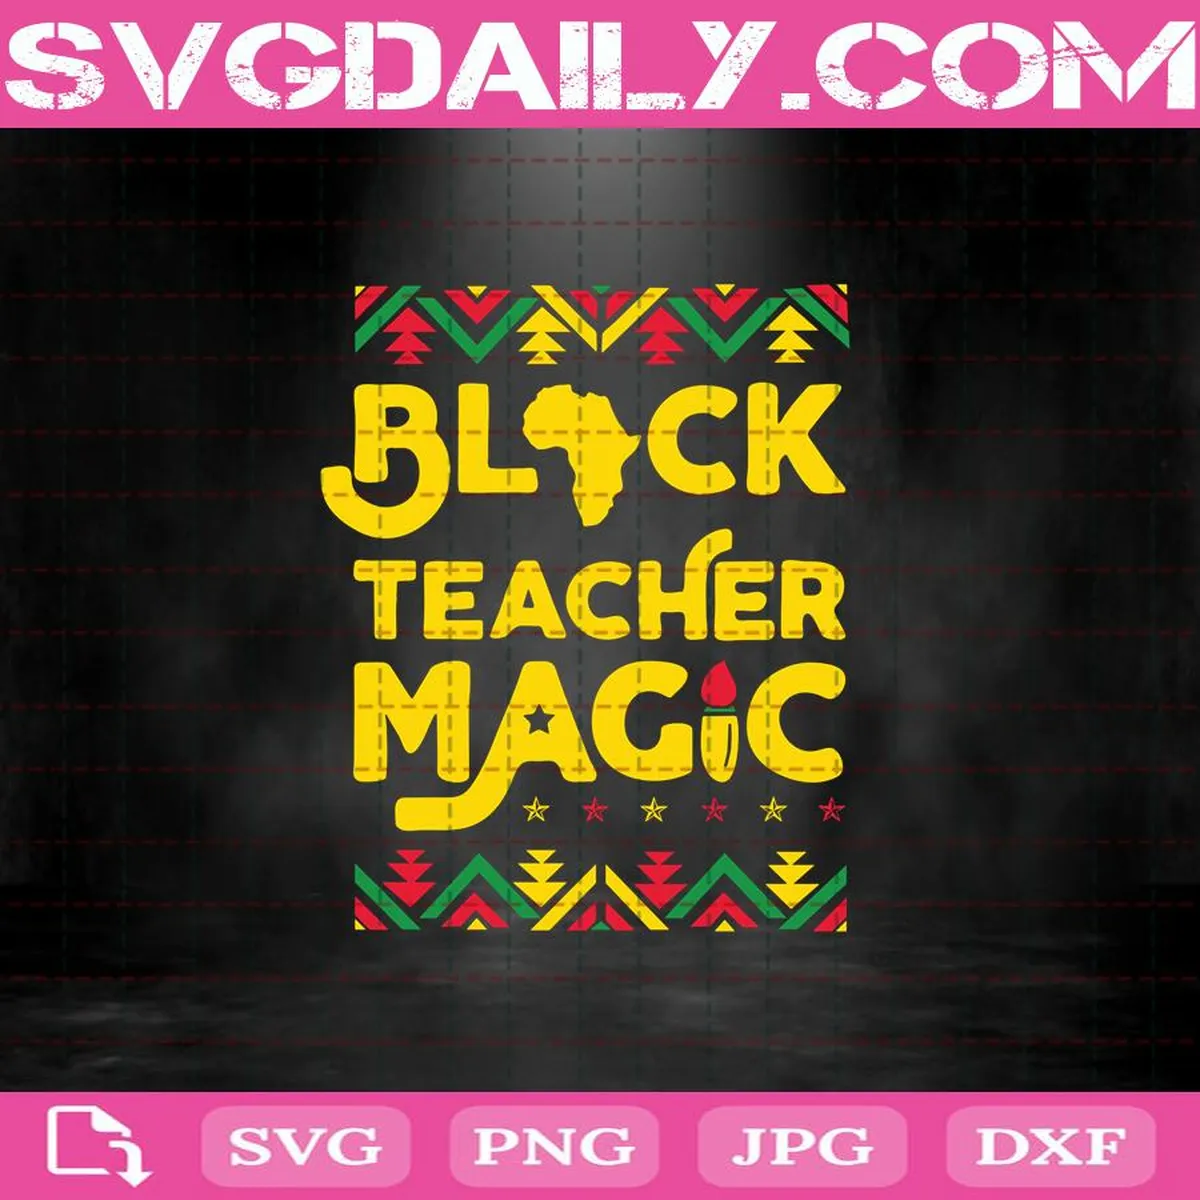 Black Teacher Magic Svg, African Pride History Svg, Black Girl Beauty Svg, Educator Svg, Afro Black Svg, Teacher Magic Svg